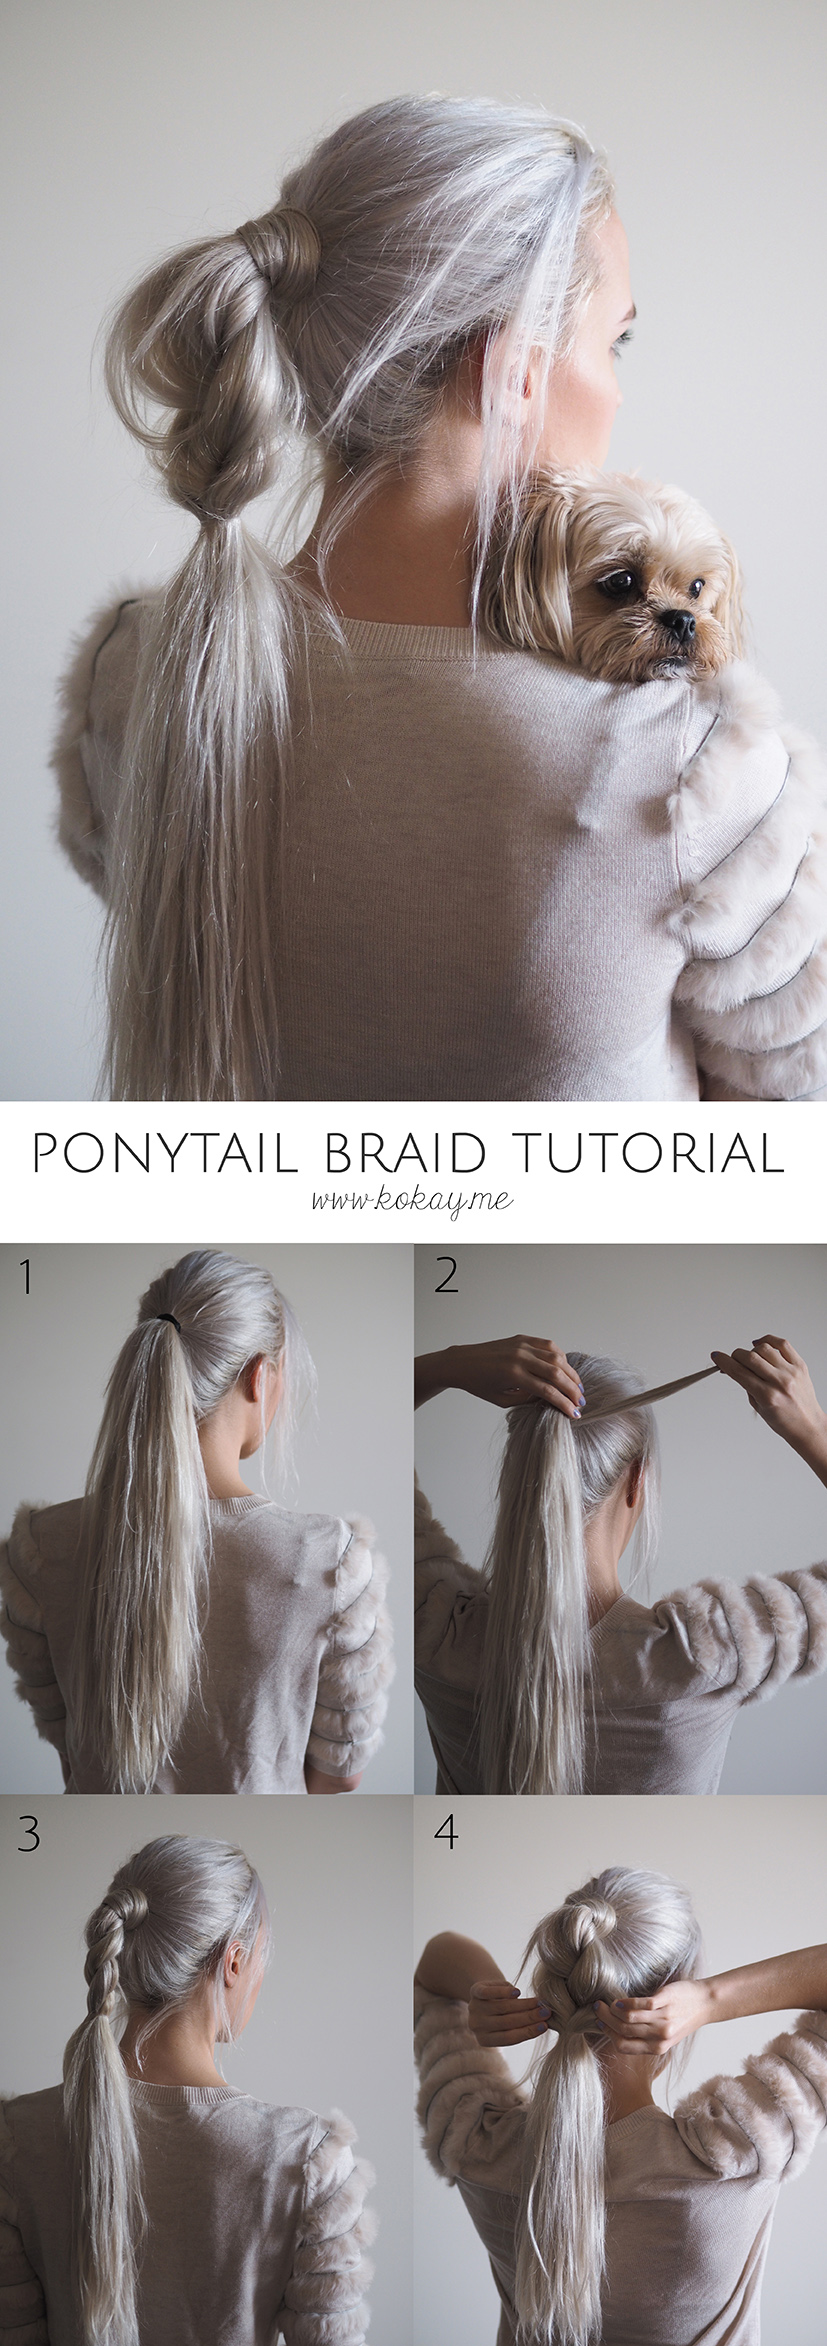 Half braided ponytail tutorial